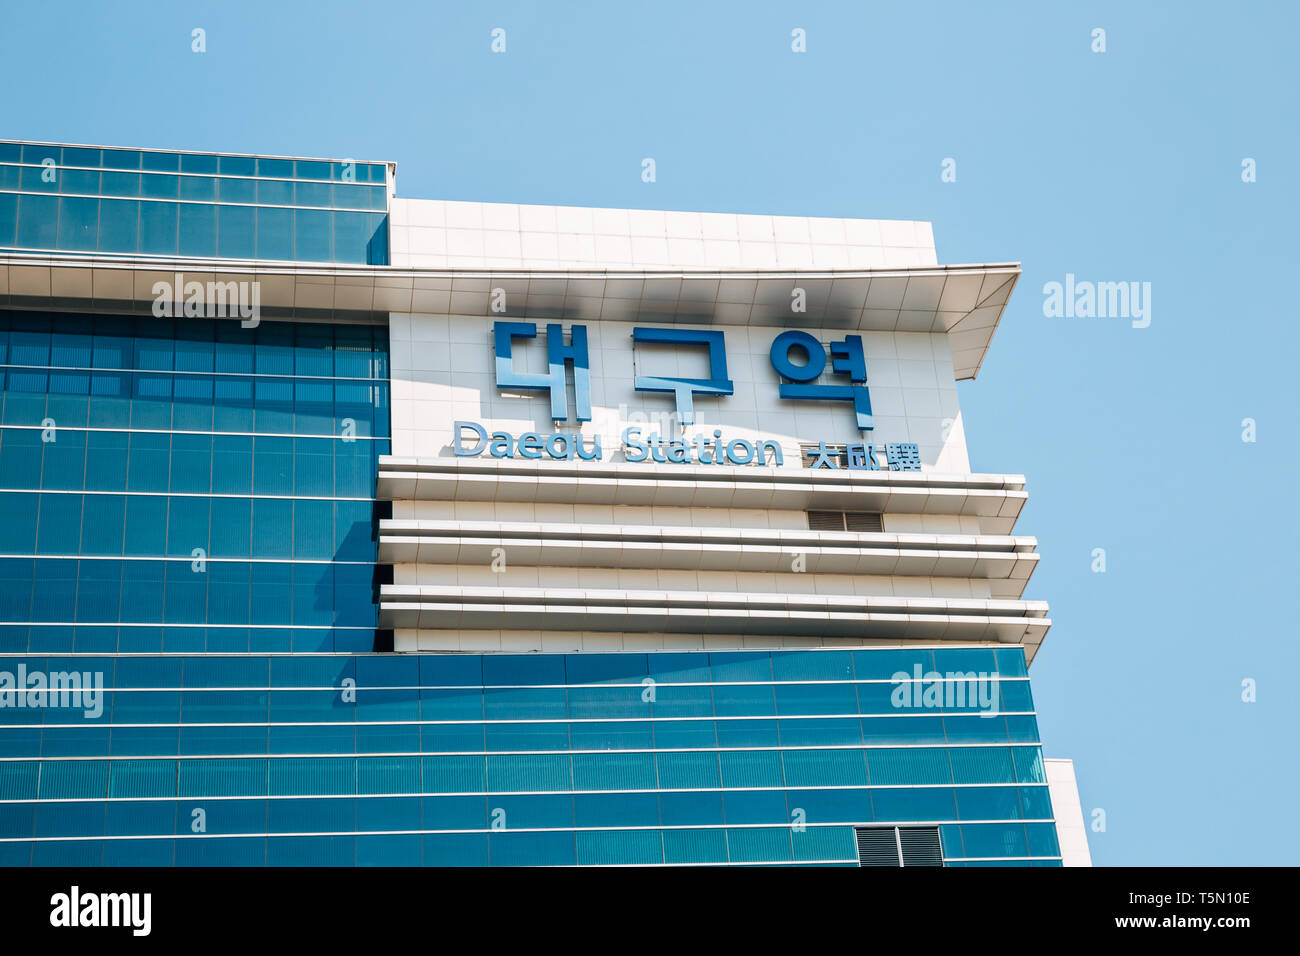 Daegu, Korea - April 2, 2019: Daegu Bahnhof Stockfoto